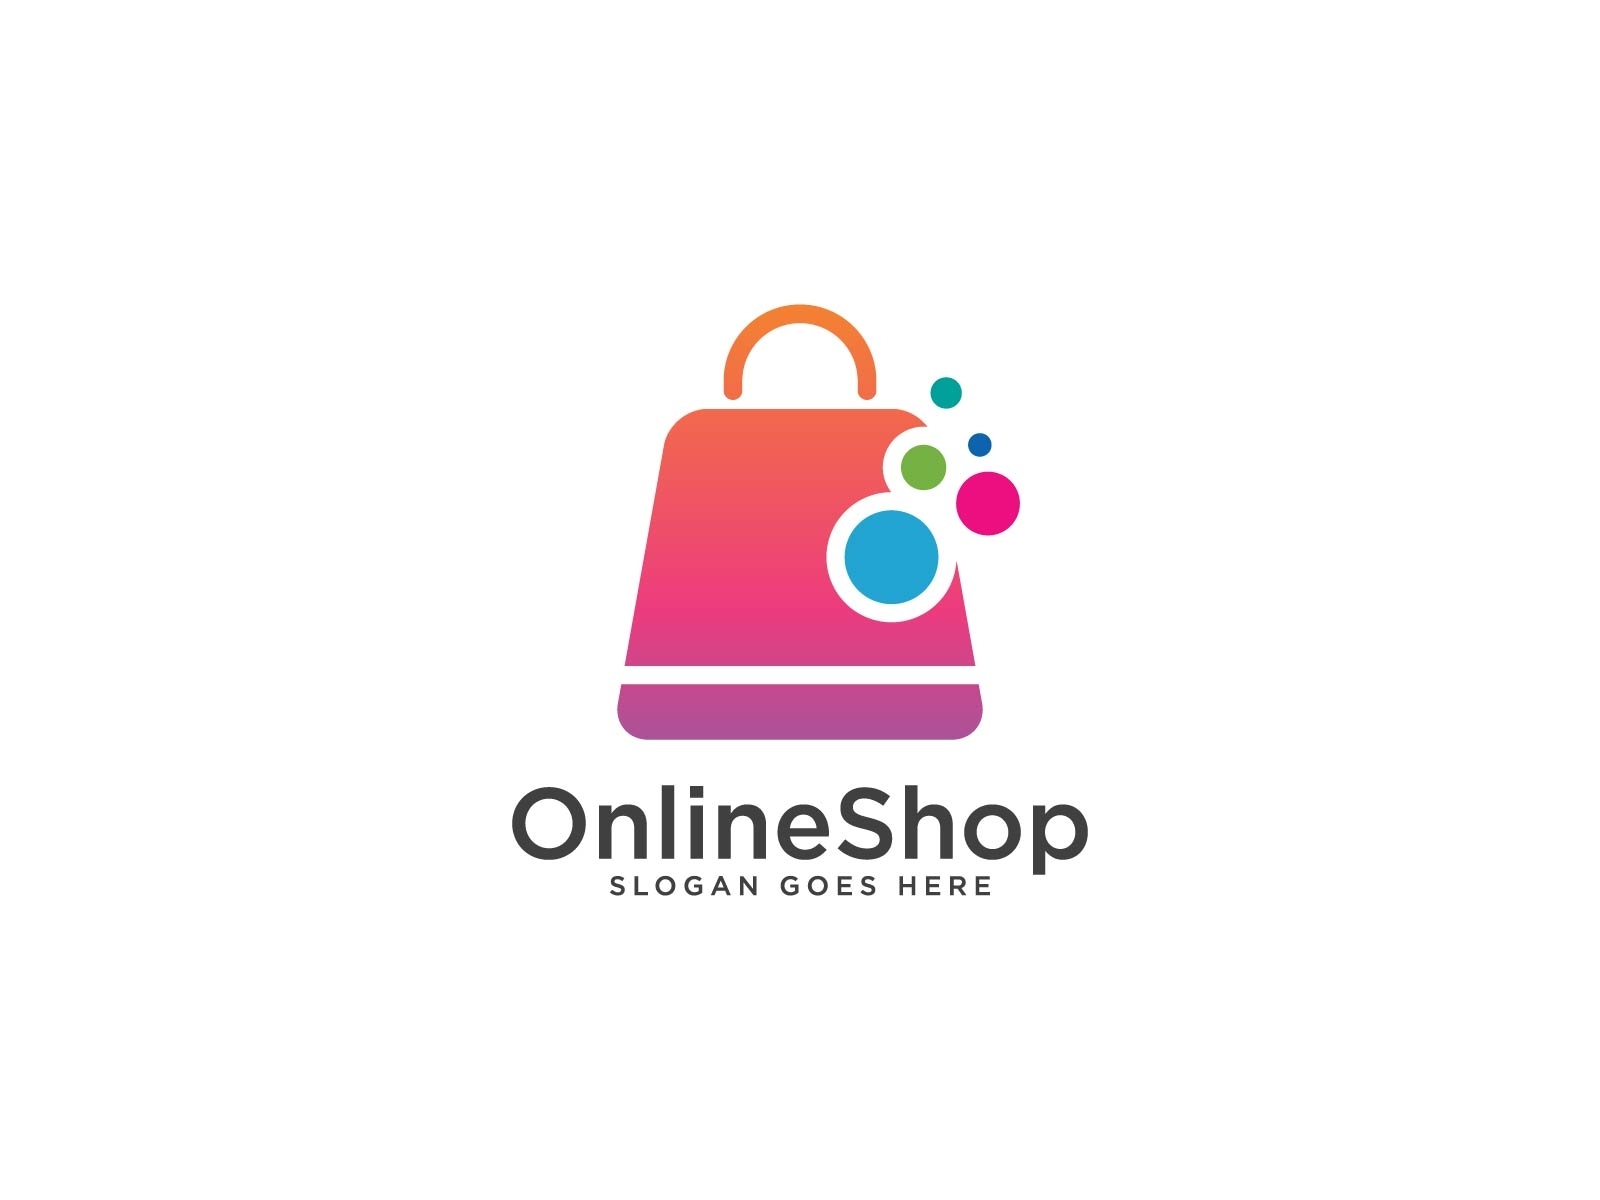 Online Shop Logo by Brand Semut on Dribbble